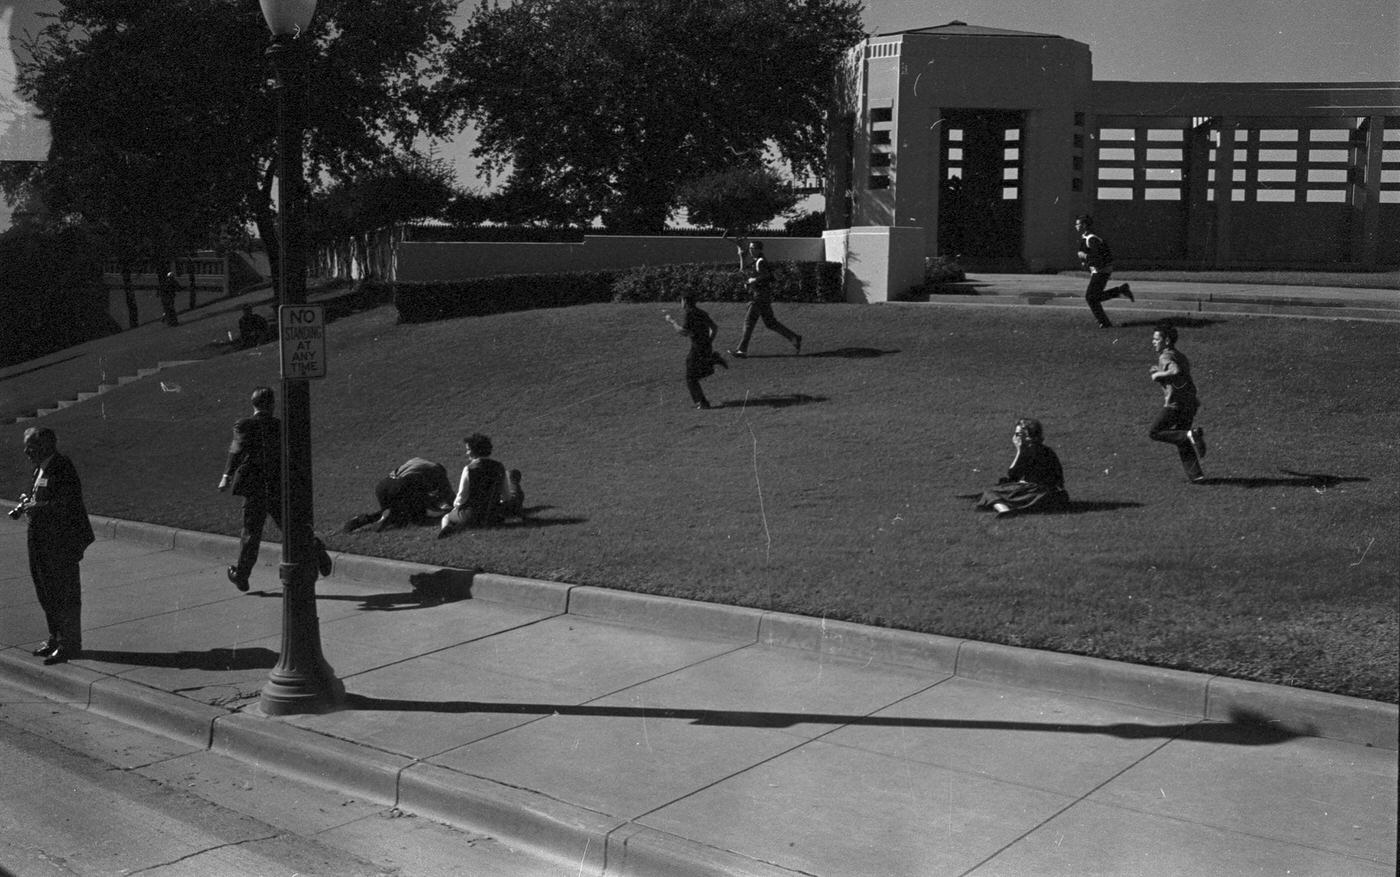 Grassy Knoll, near Dealey Plaza, Dallas, Texas following President John F. Kennedy's assassination, 1963